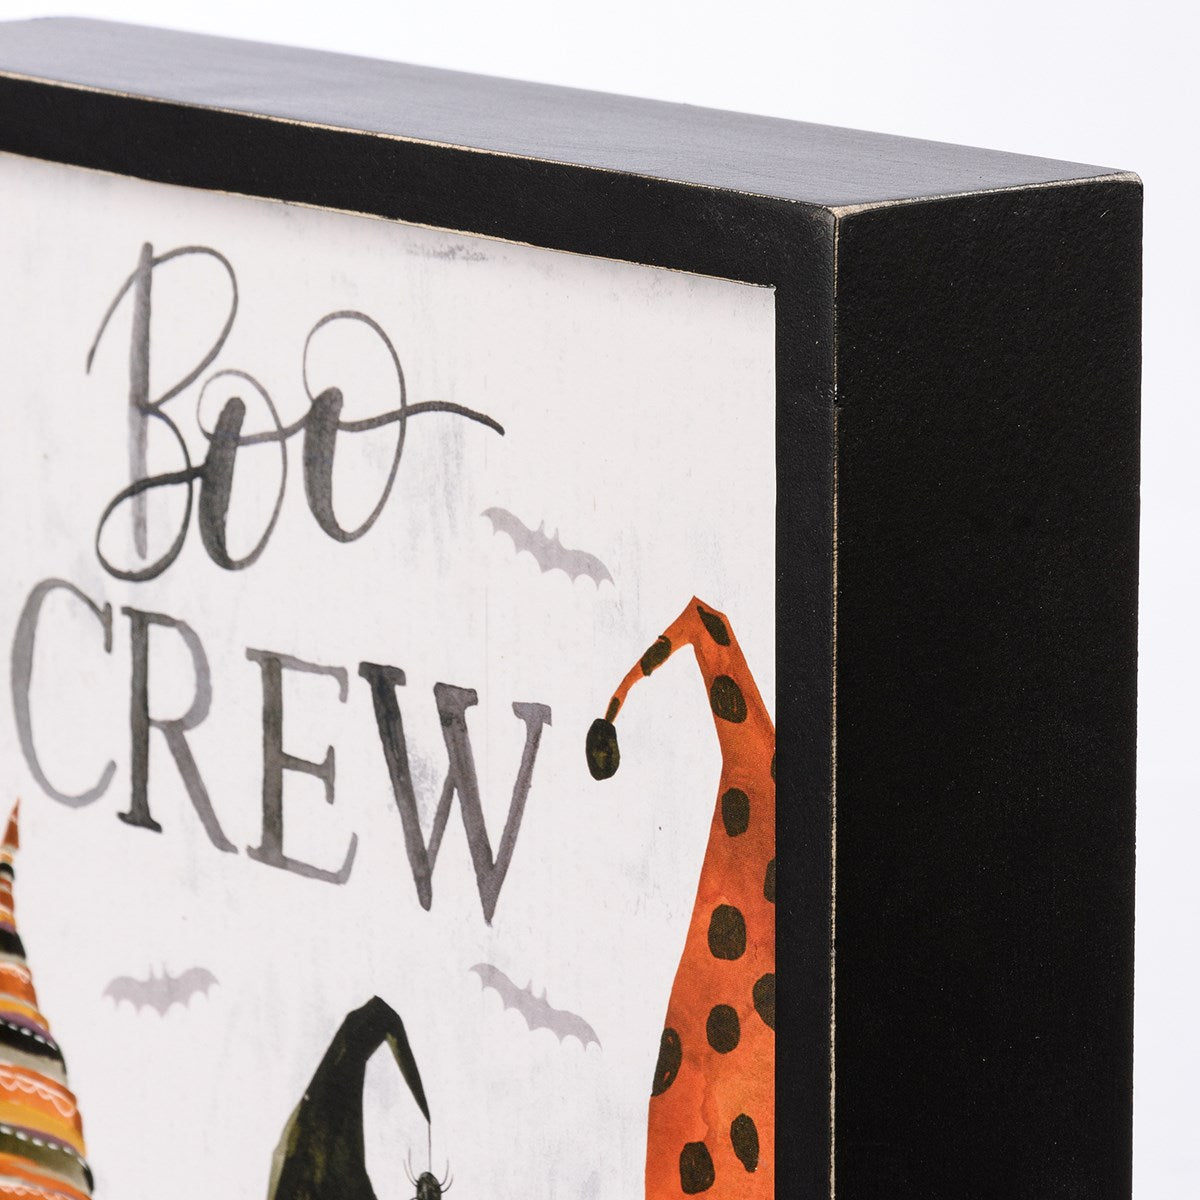 Boo Crew Inset Box Sign